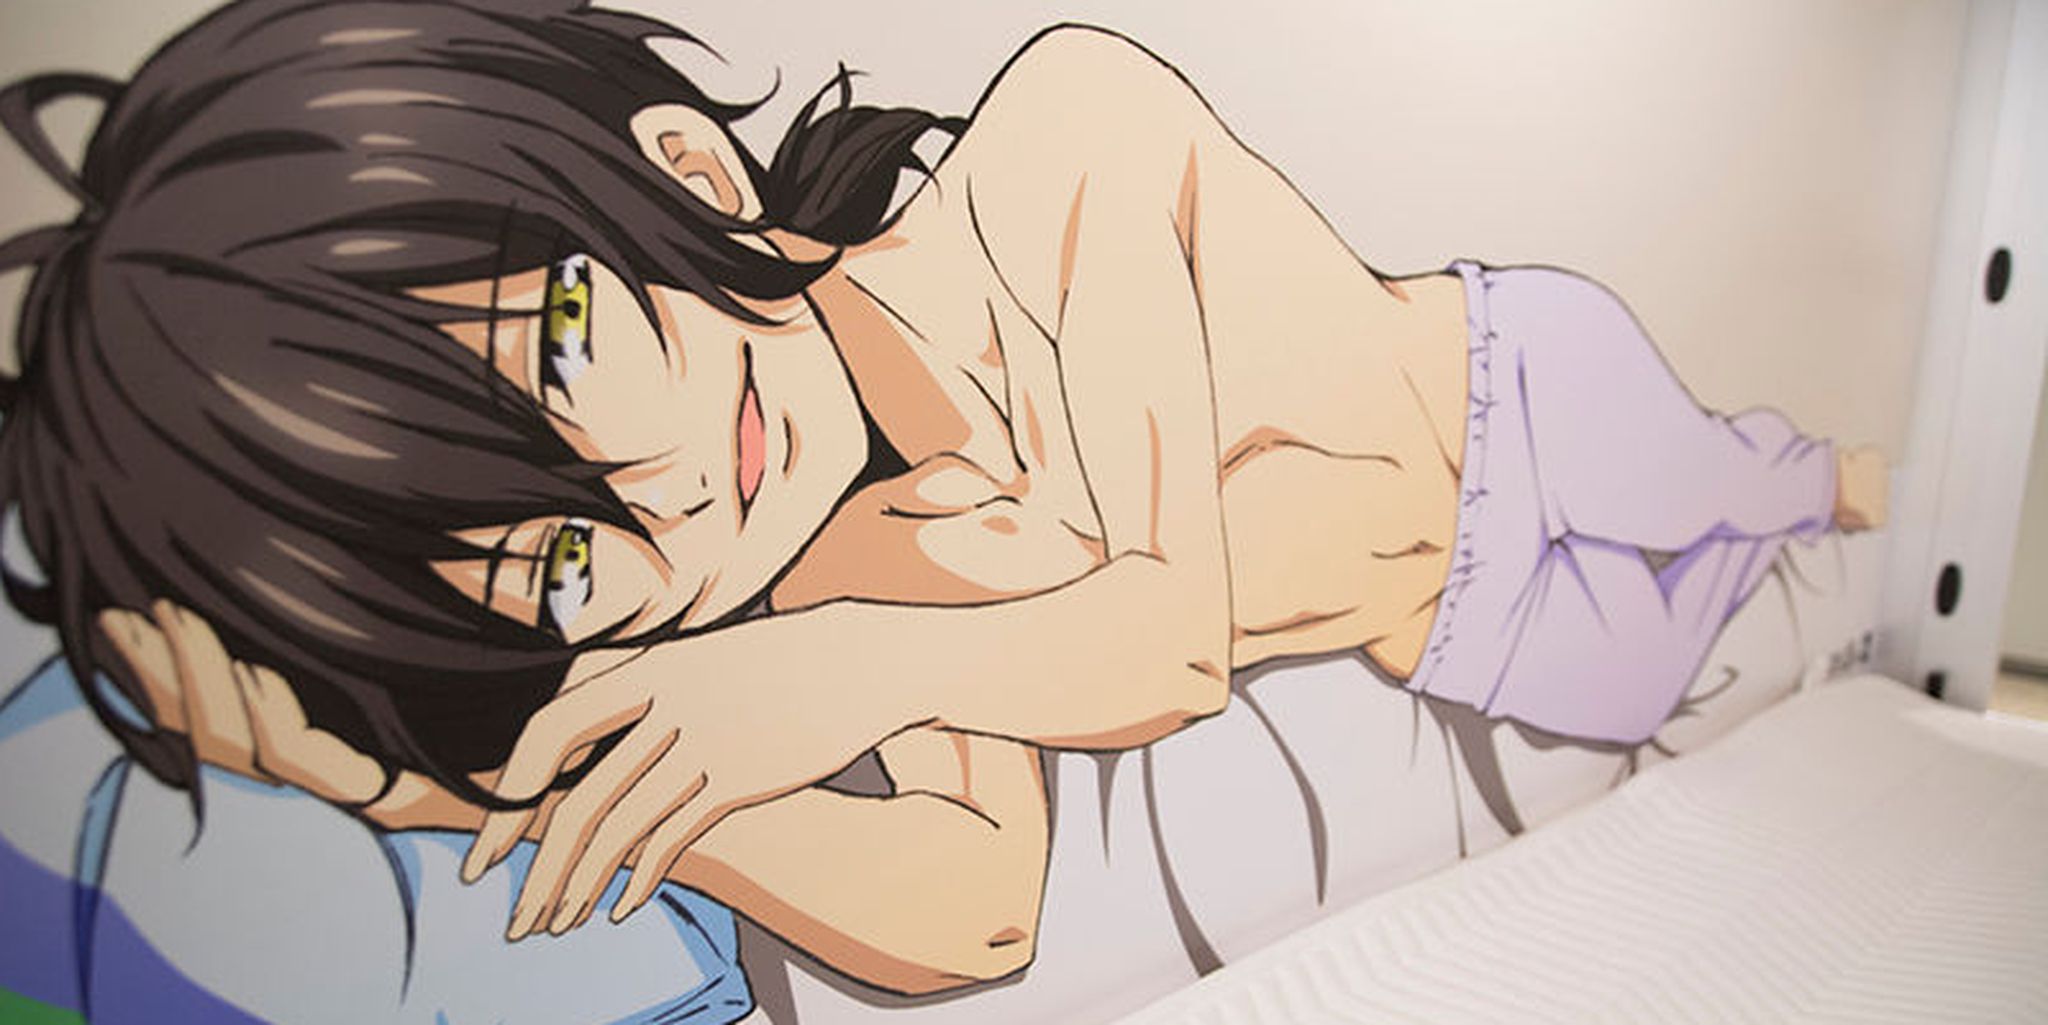 16 Anime Guy Sleep Images, Stock Photos & Vectors | Shutterstock